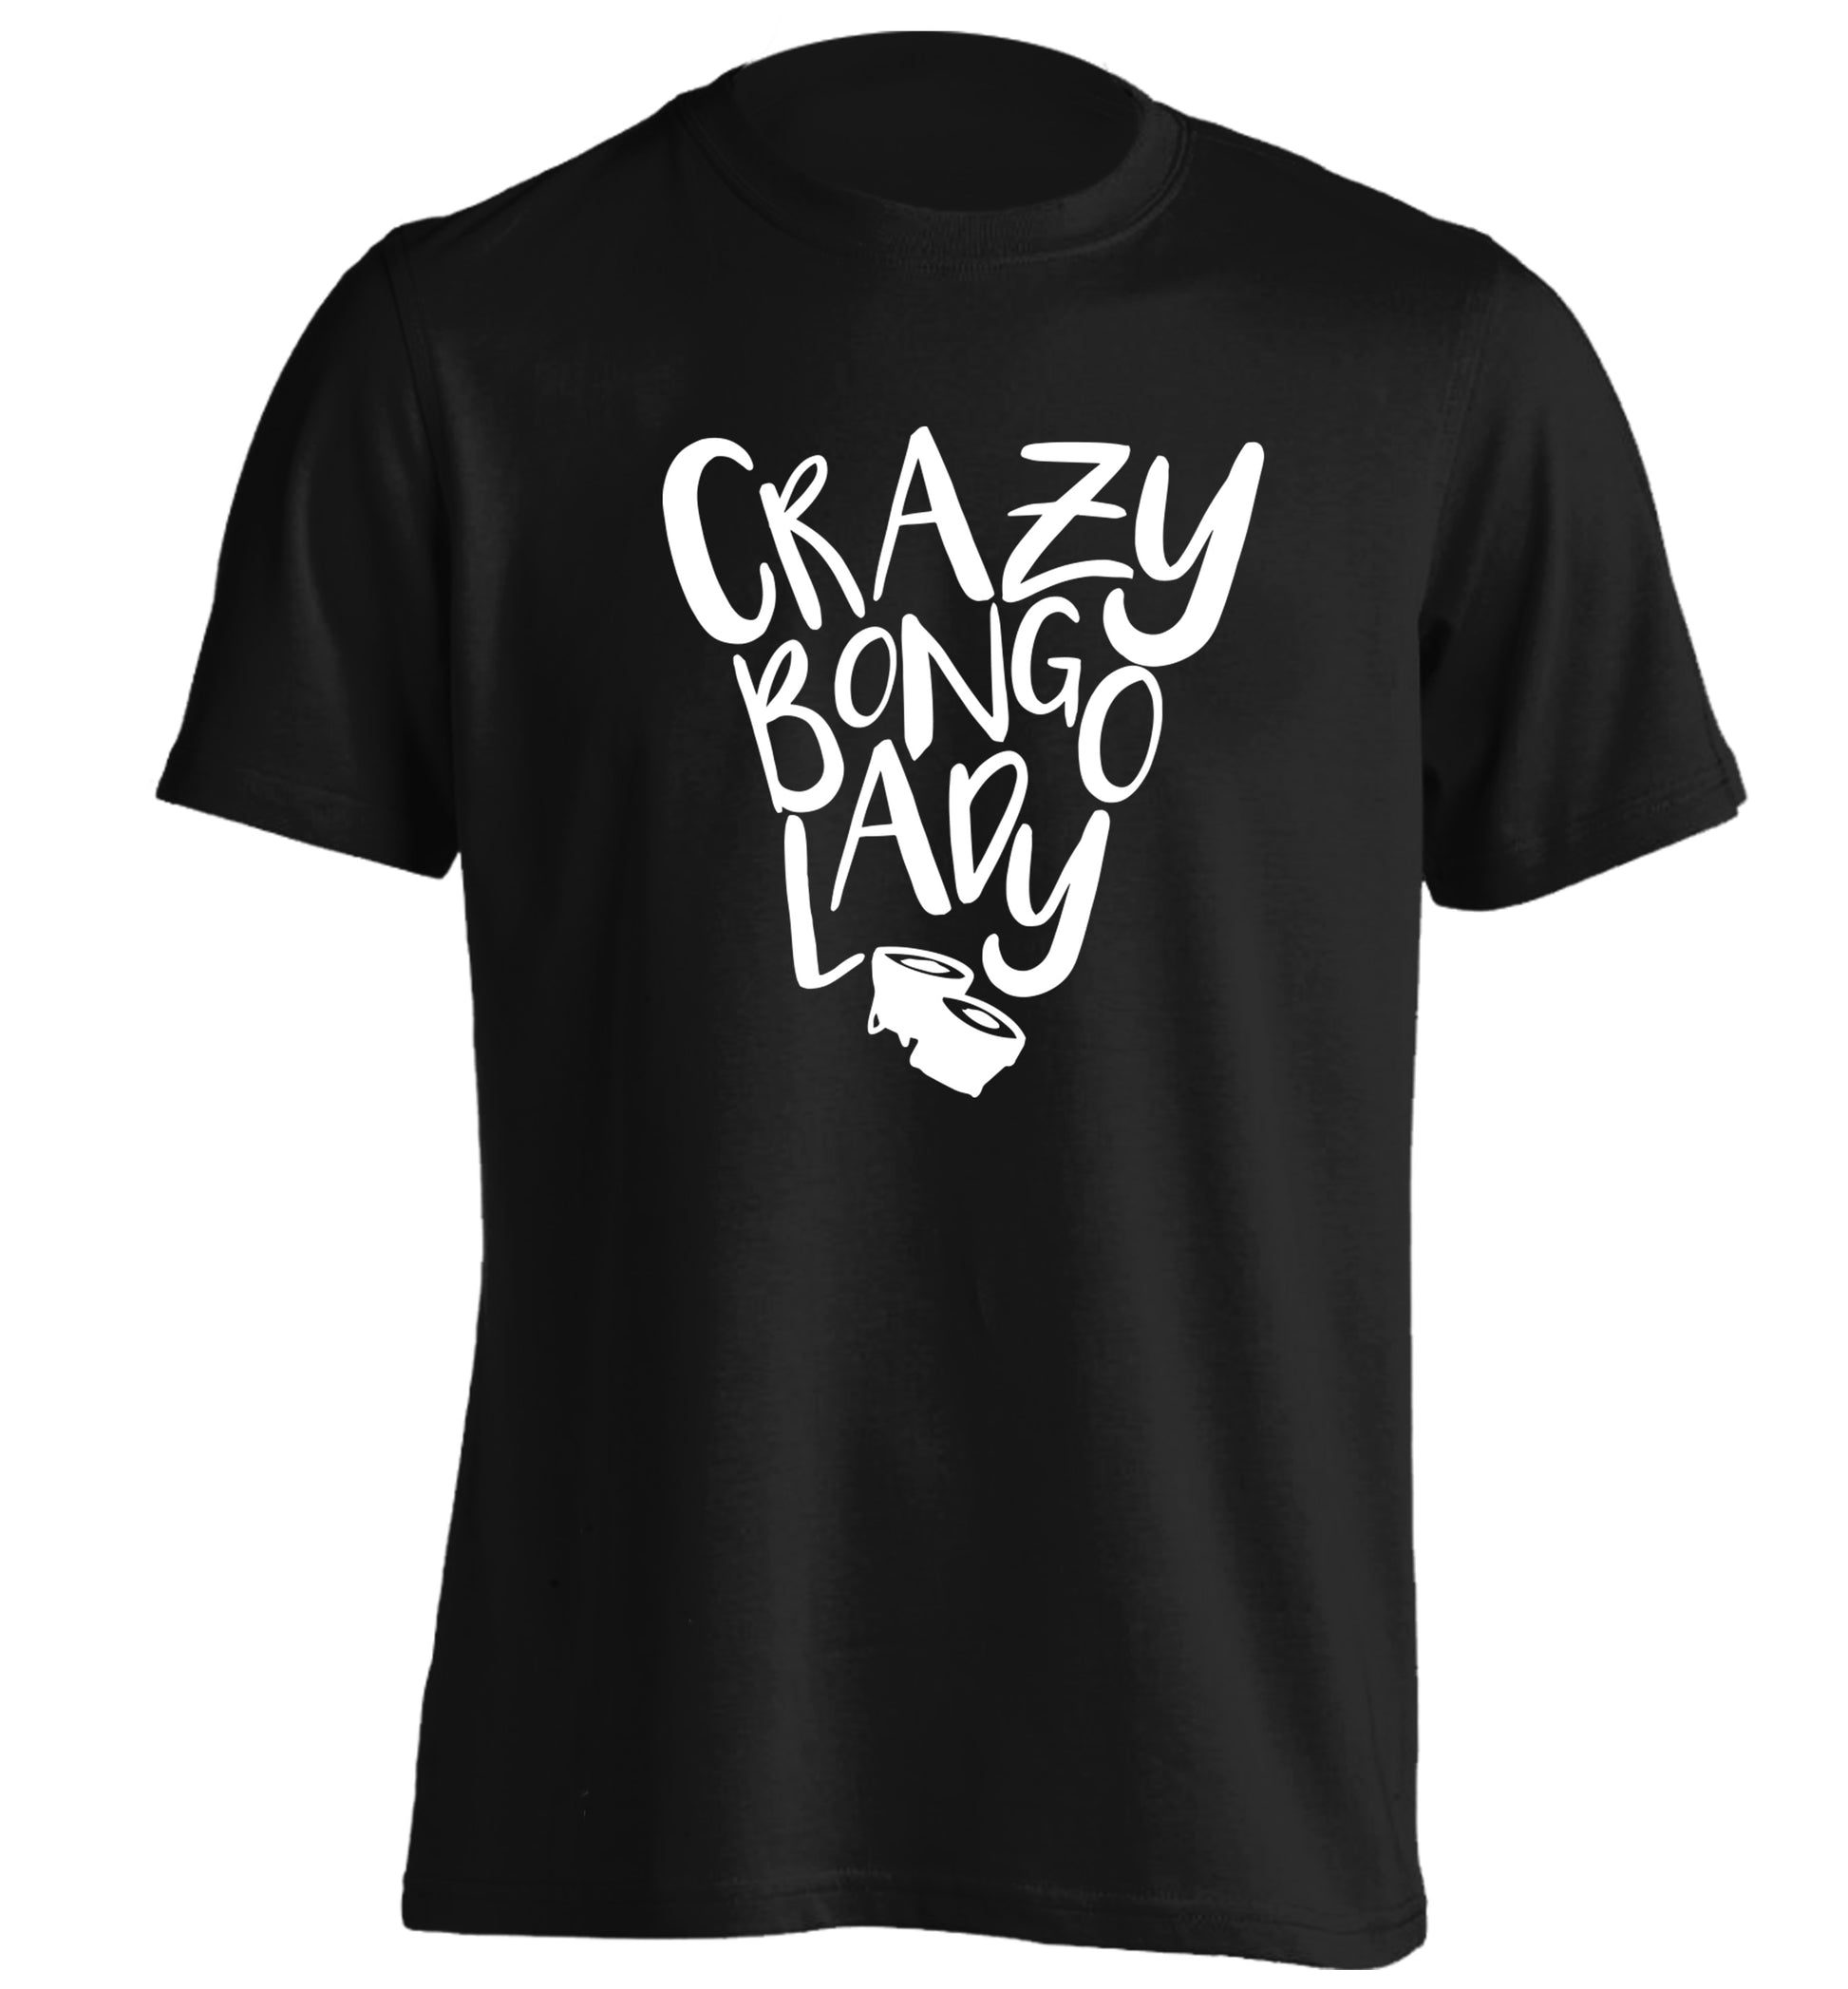 Crazy bongo lady adults unisex black Tshirt 2XL